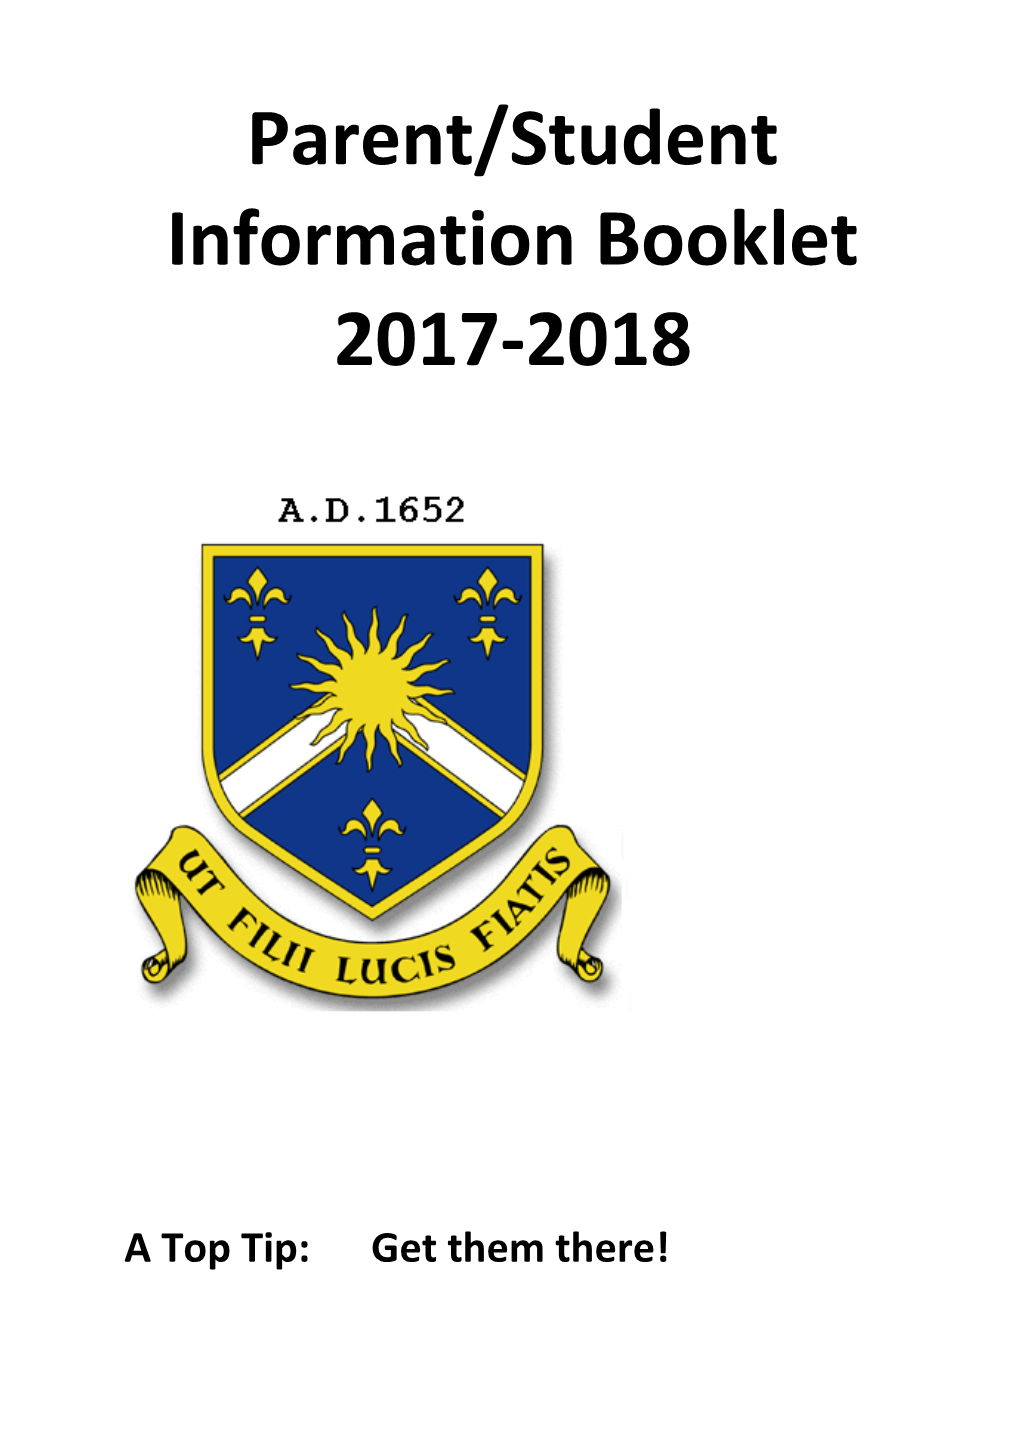 Parent/Student Information Booklet